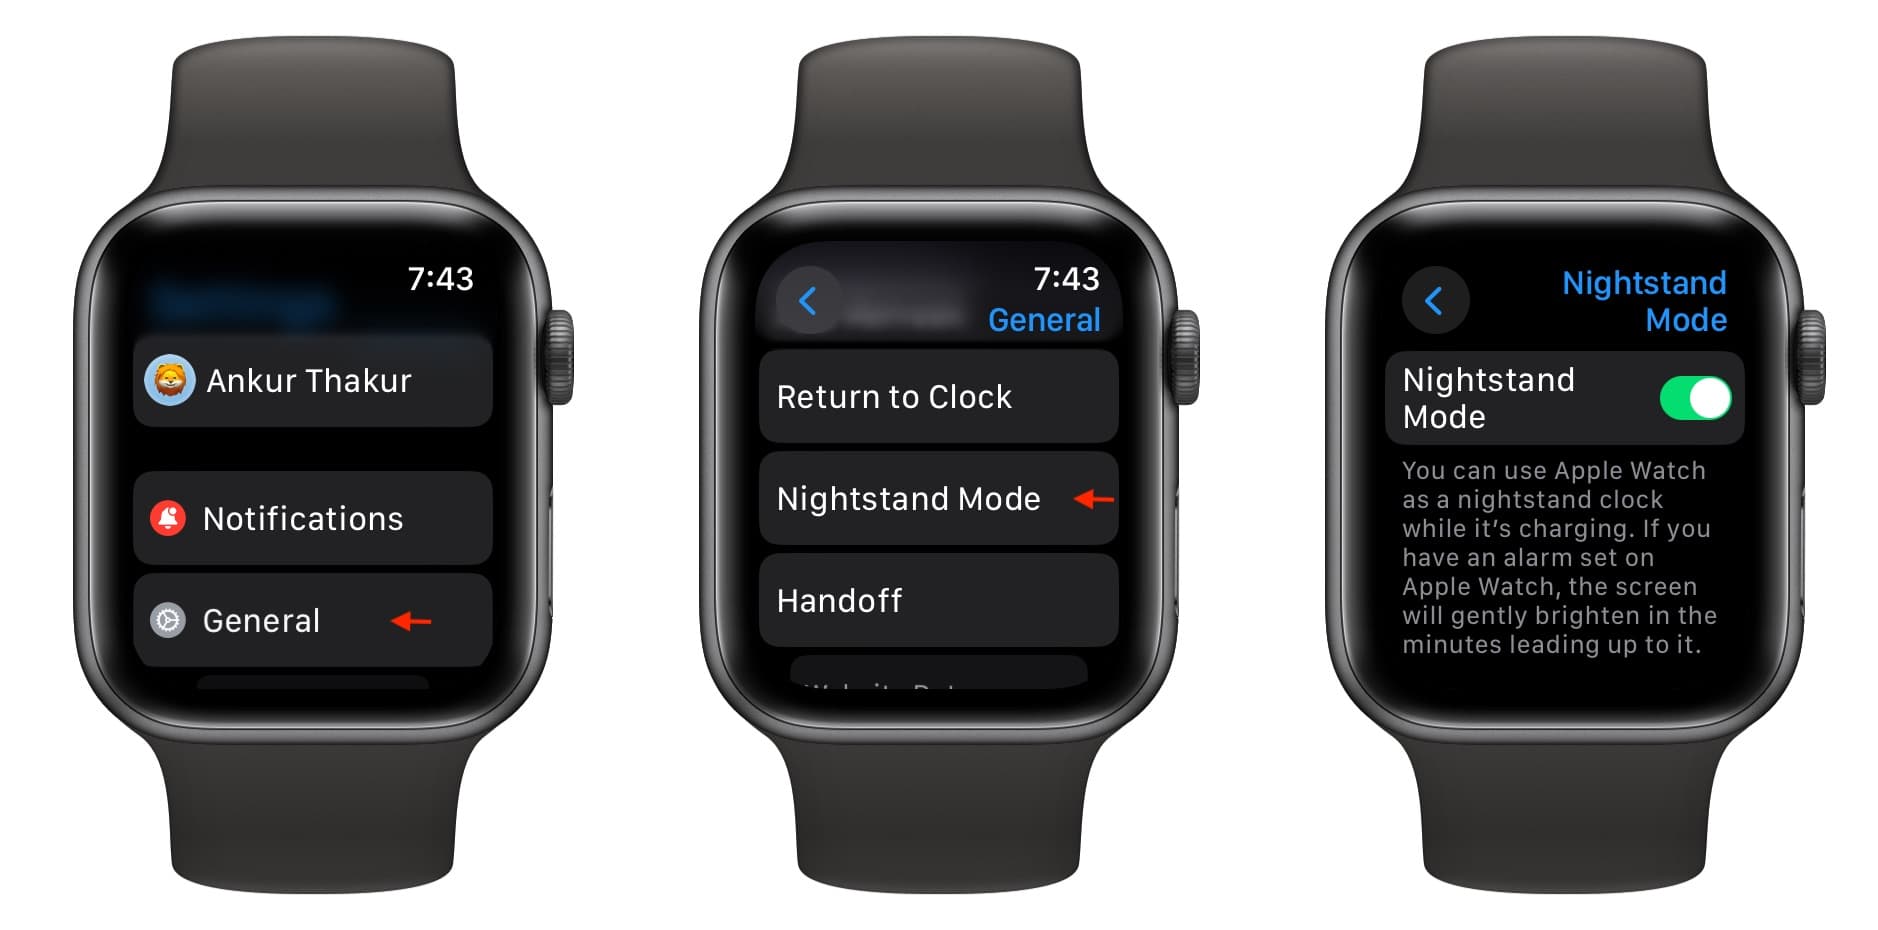 Turn on Nightstand Mode on Apple Watch